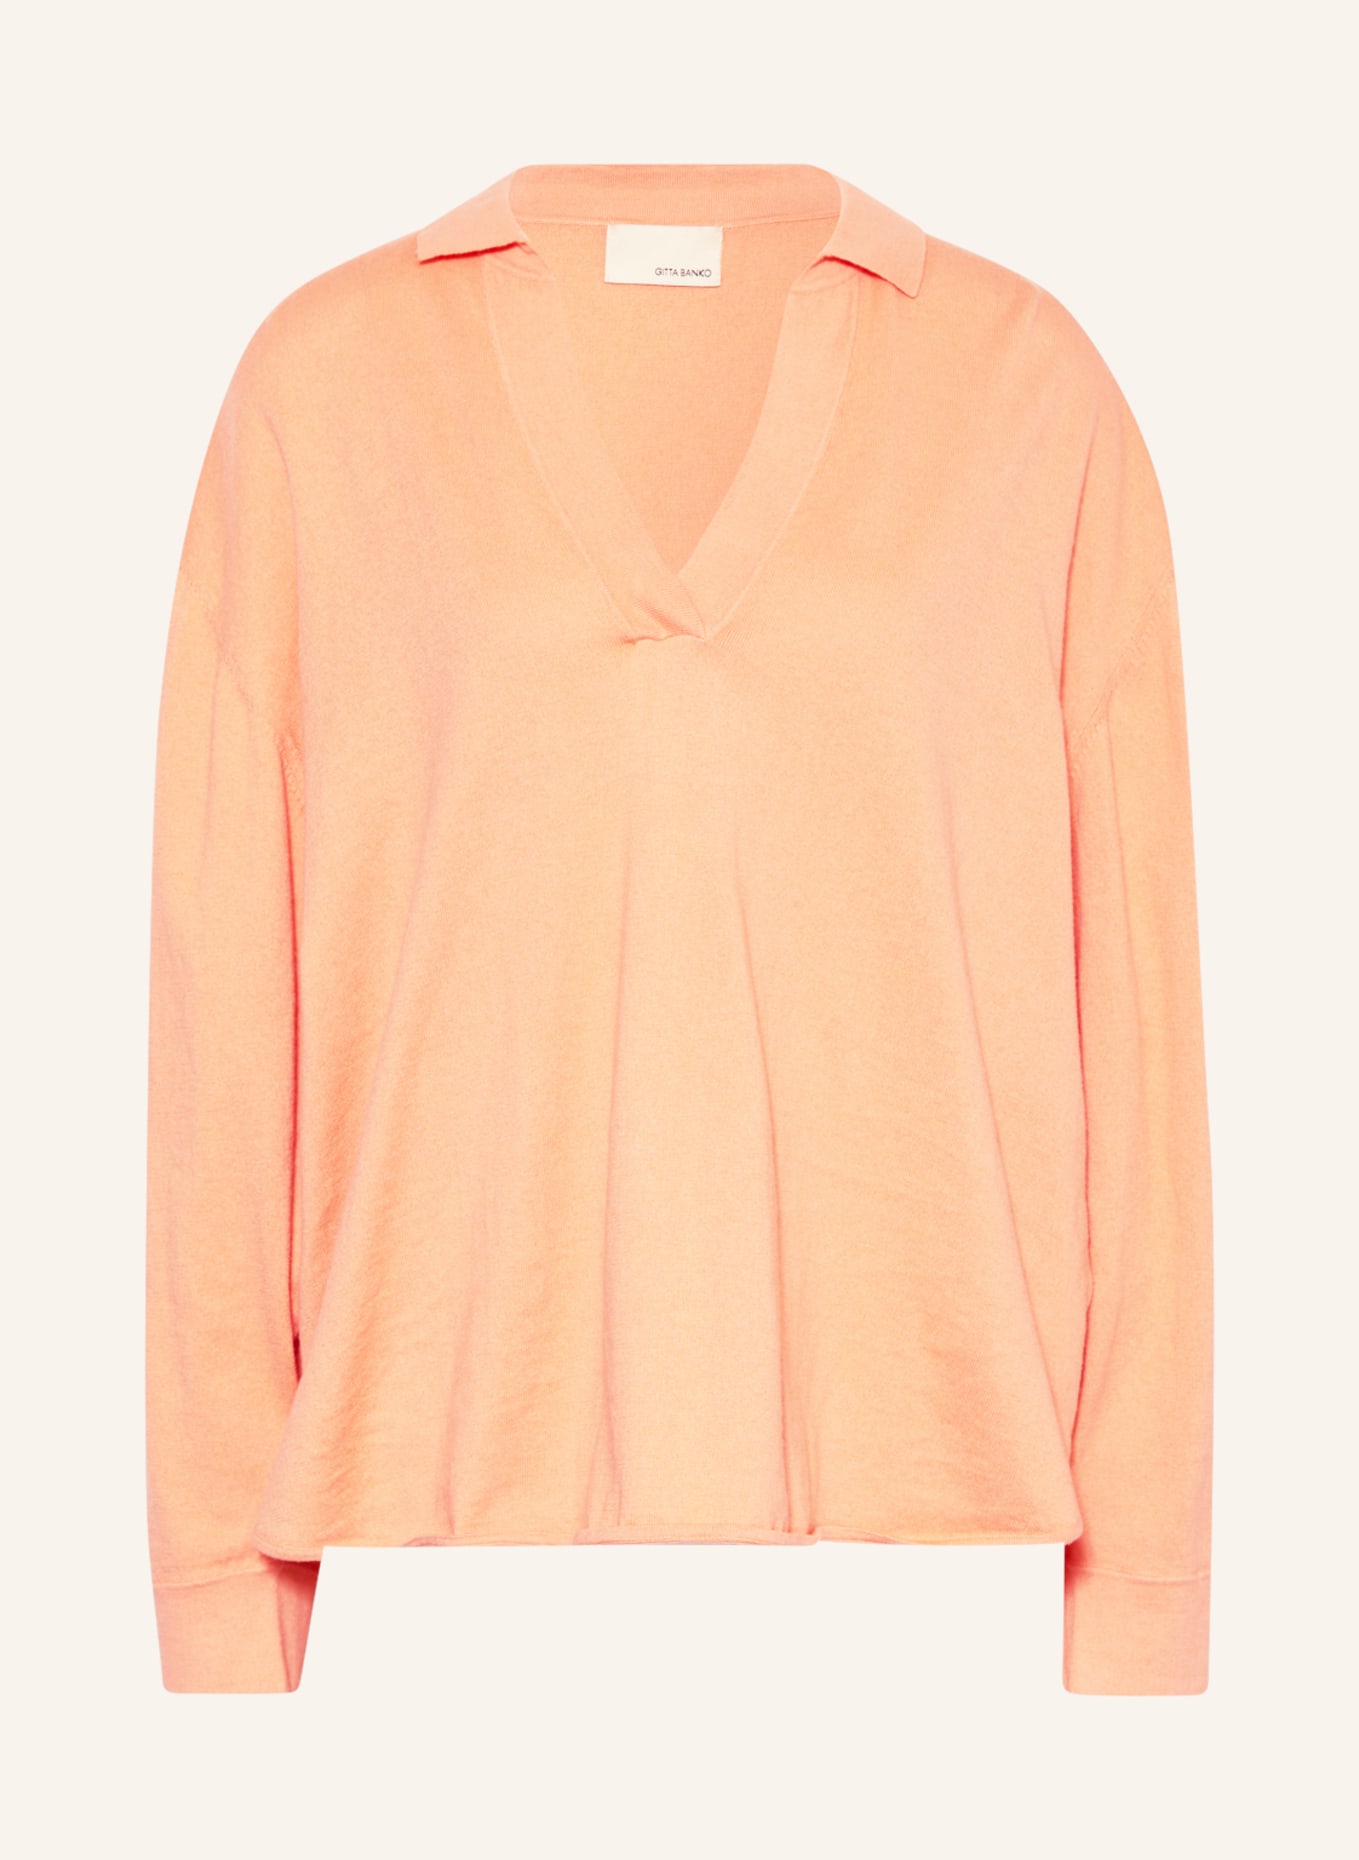 GITTA BANKO Pullover mit Cashmere, Farbe: ORANGE (Bild 1)